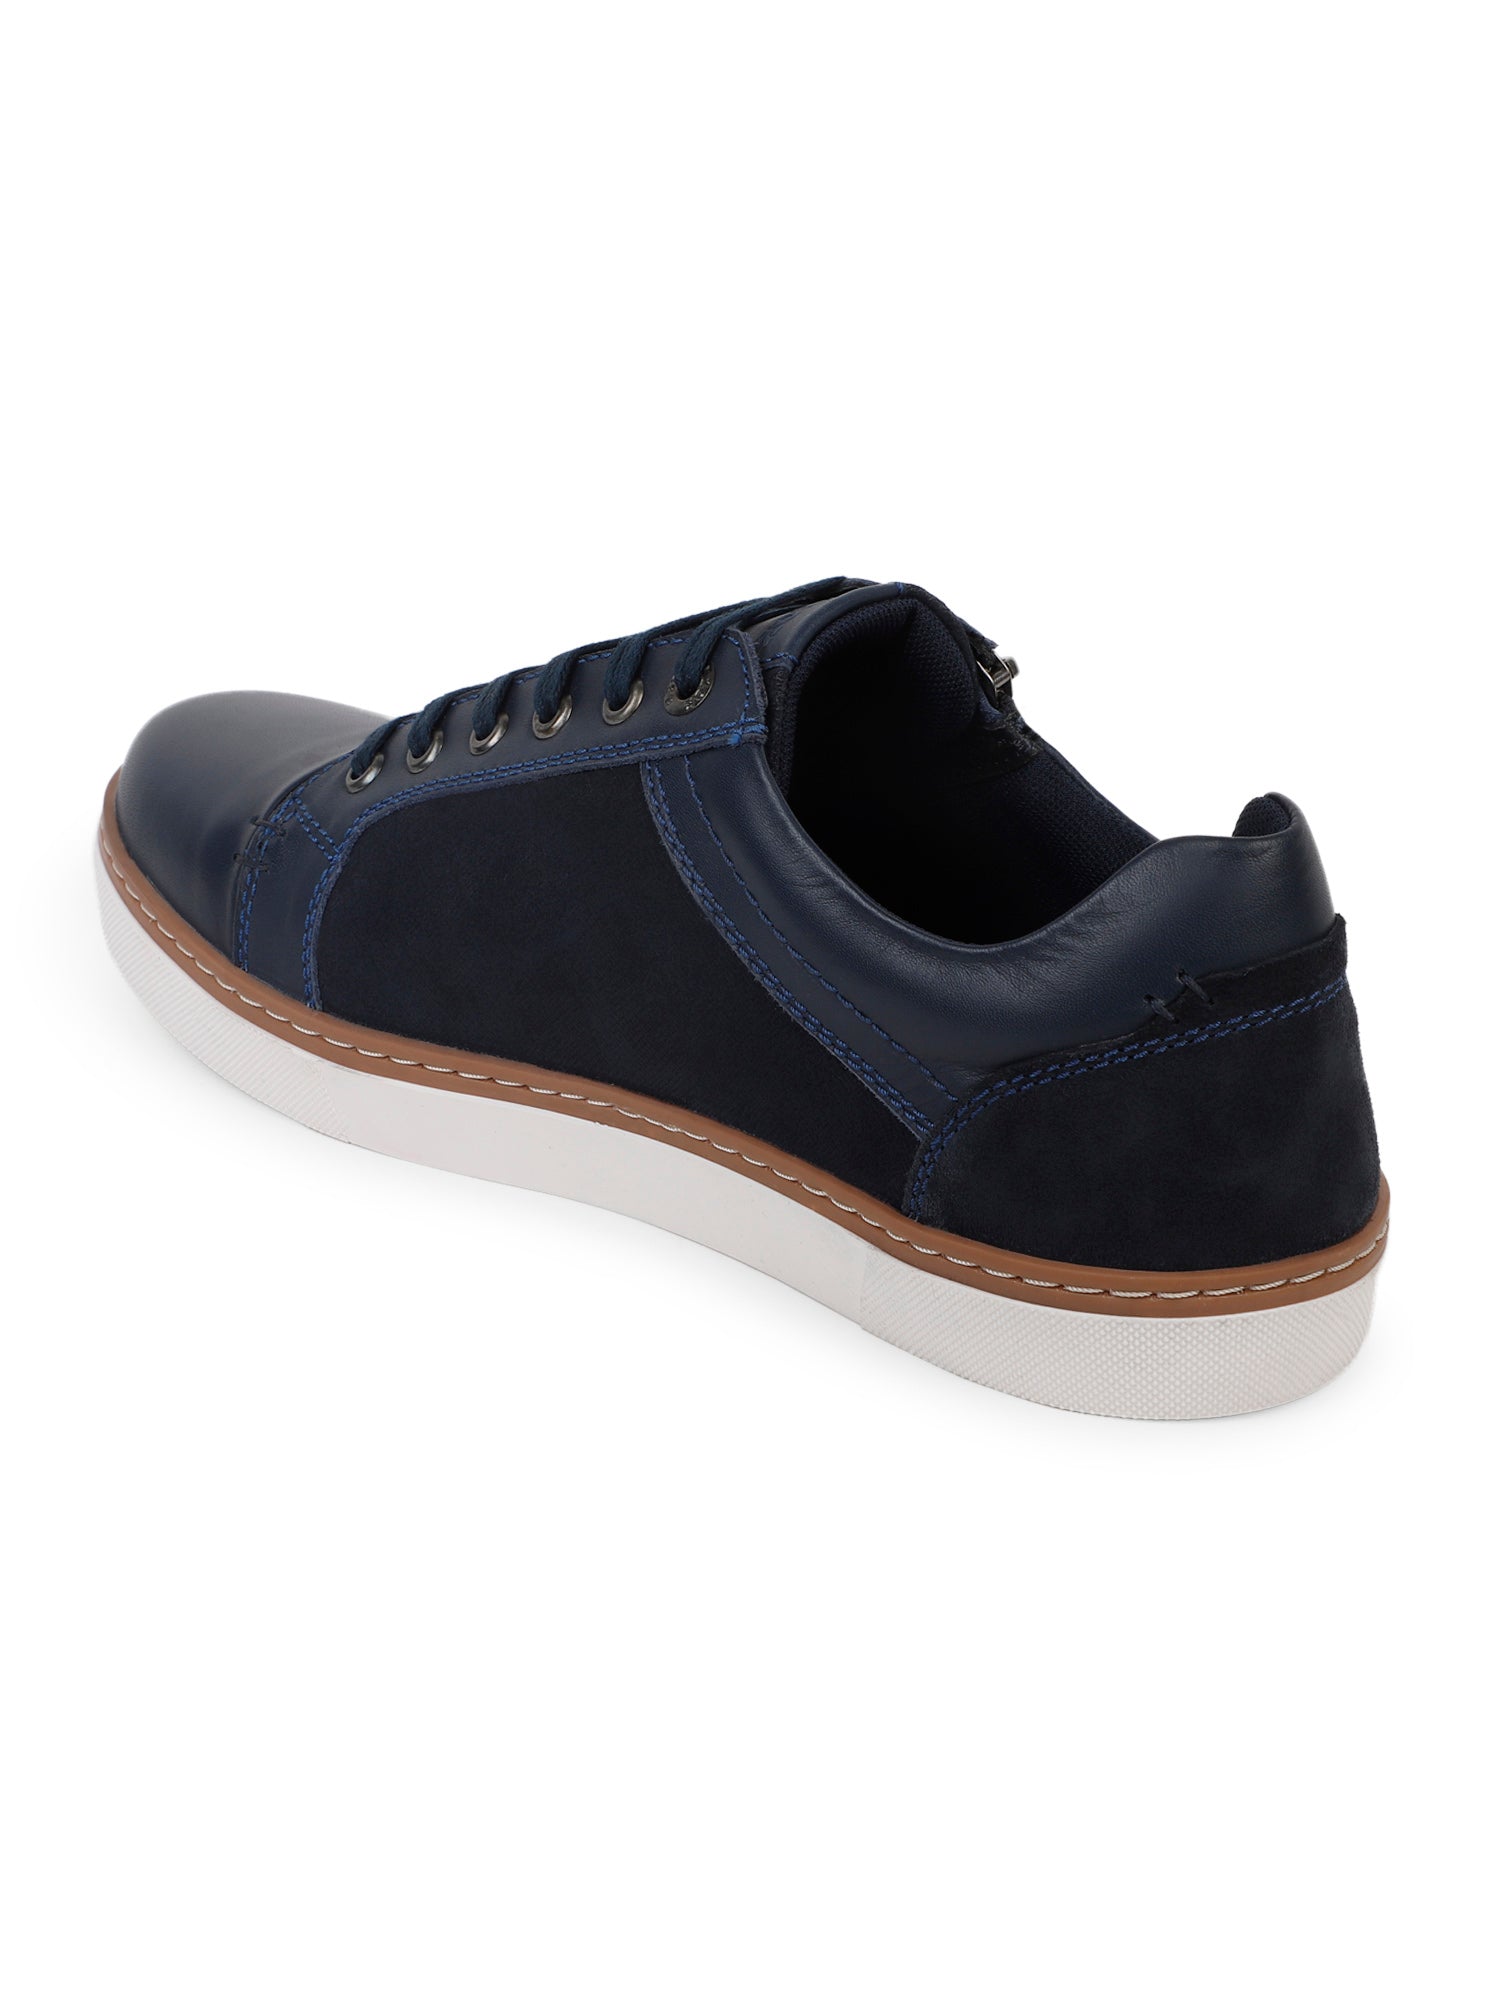 Ezok Men Blue Sneaker Casual Shoes